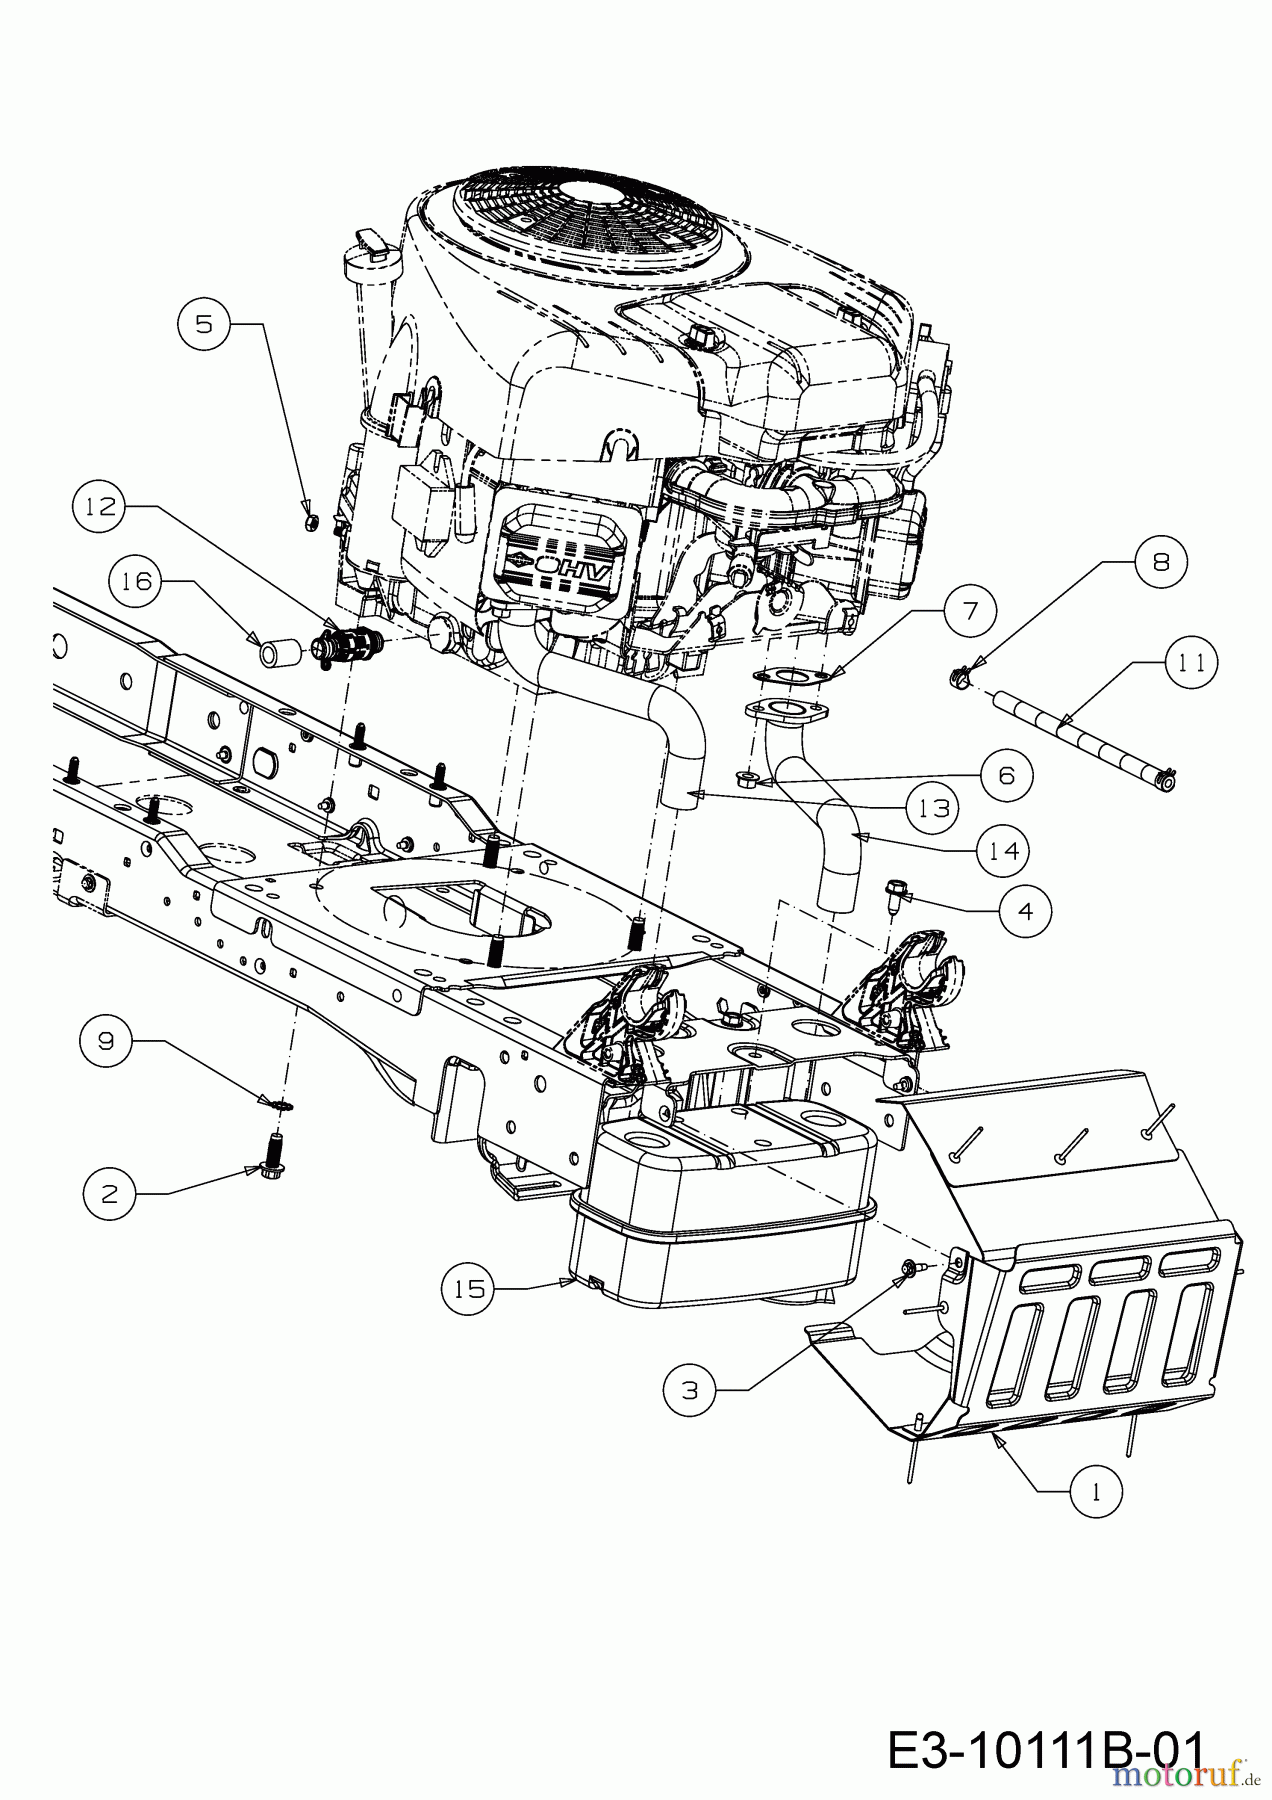  Wolf-Garten Tracteurs de pelouse 106.220 H 13CAA1VR650  (2019) Accessoires moteur